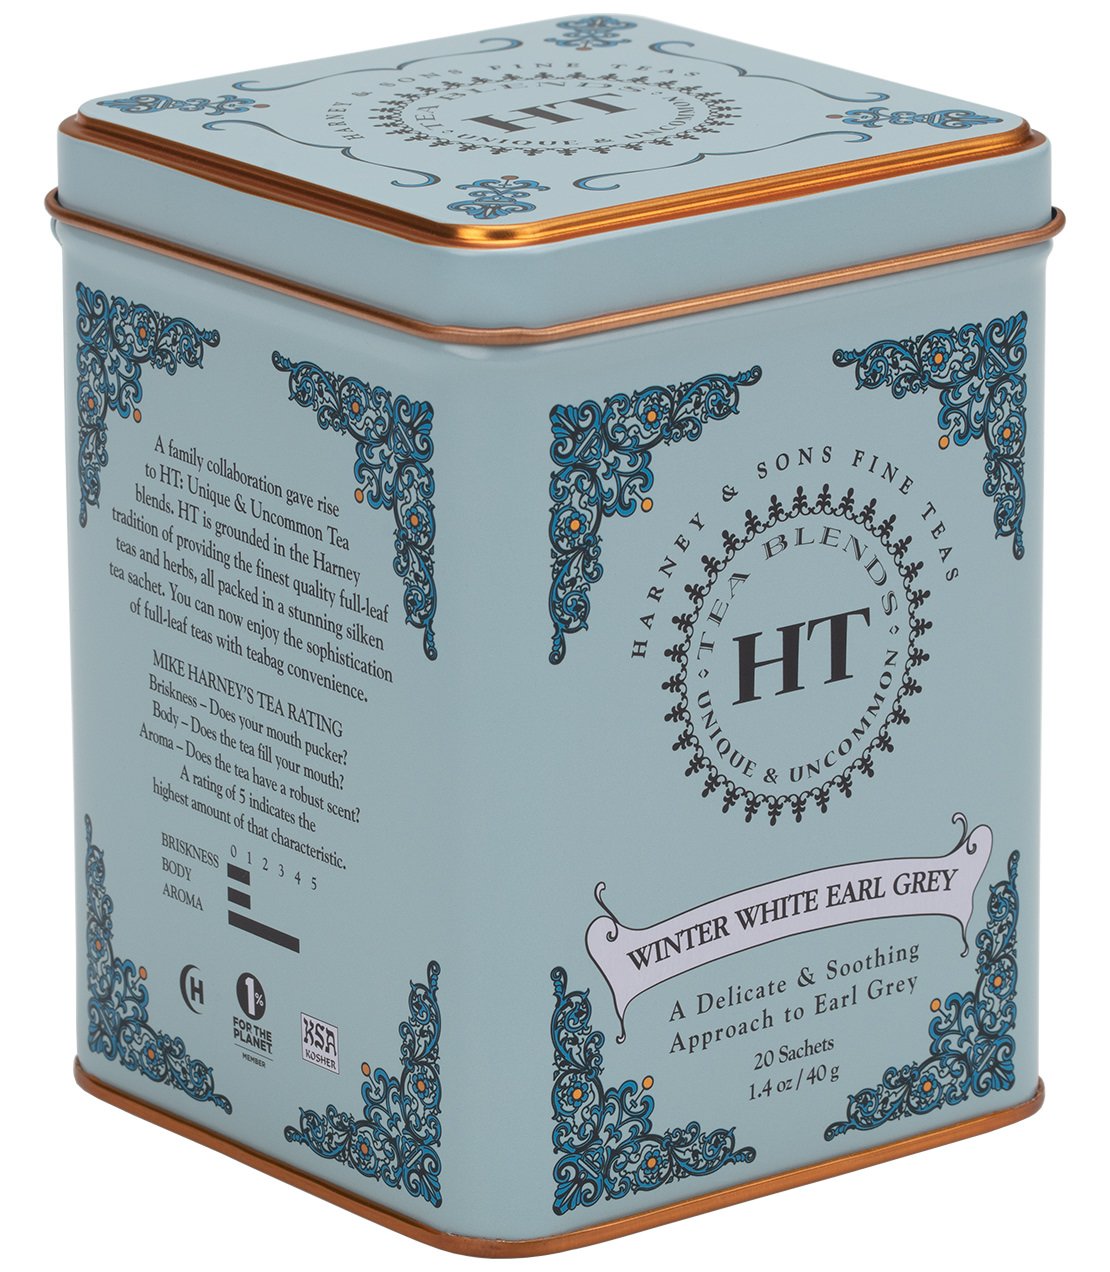 Winter White Earl Grey, HT Tin of 20 Sachets -   - Harney & Sons Fine Teas